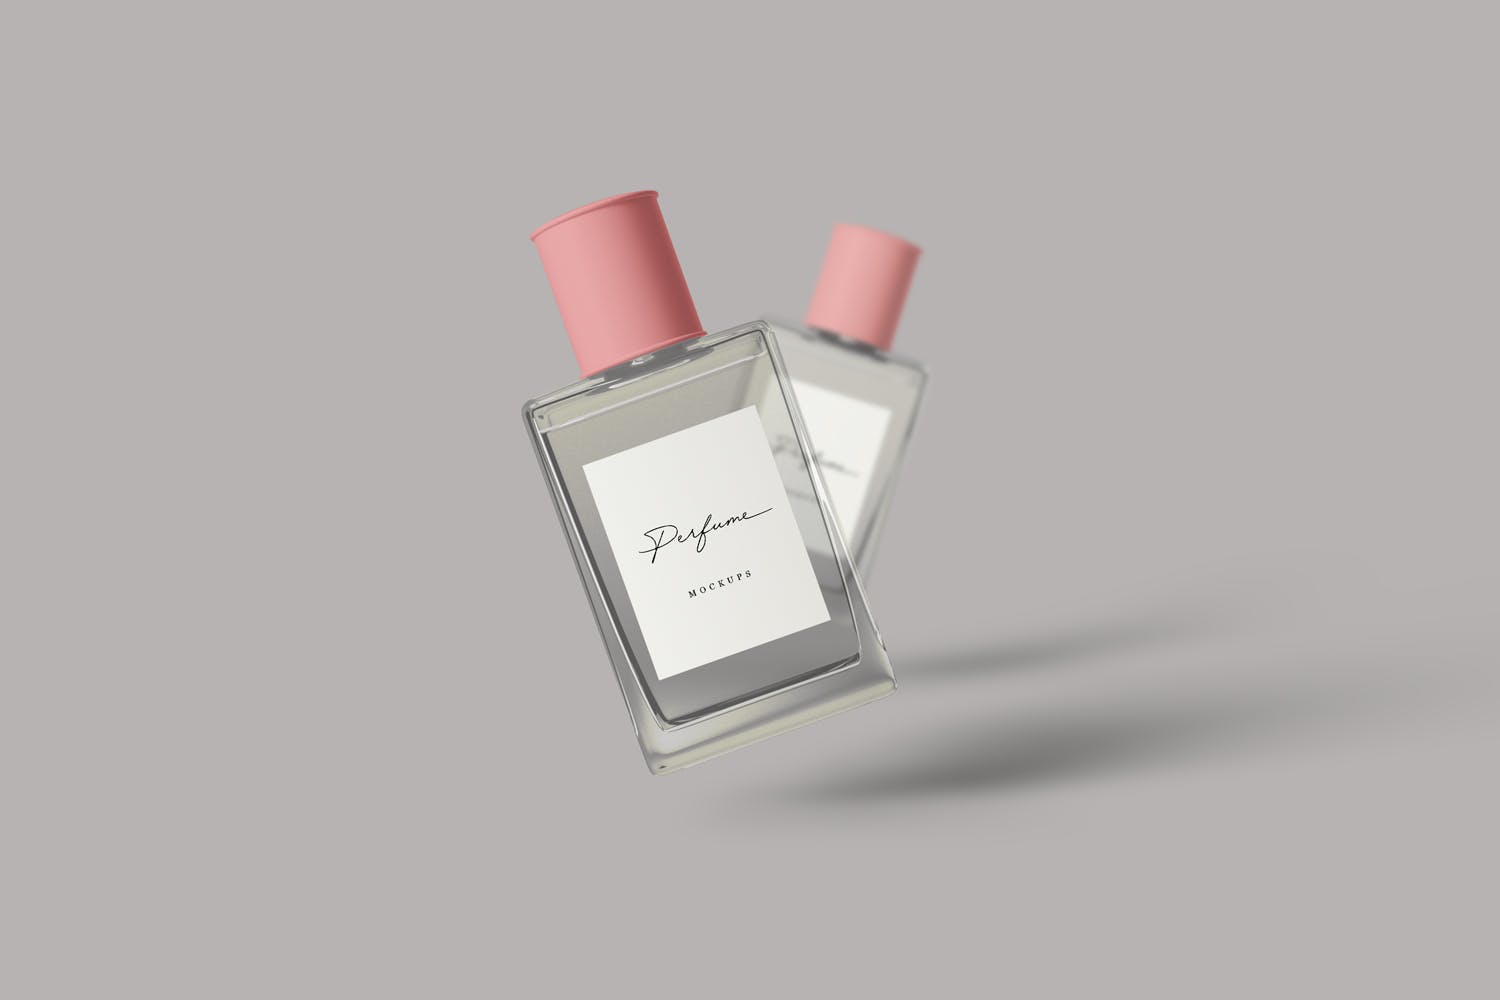 香水瓶外观设计图样机 Perfume Mockups